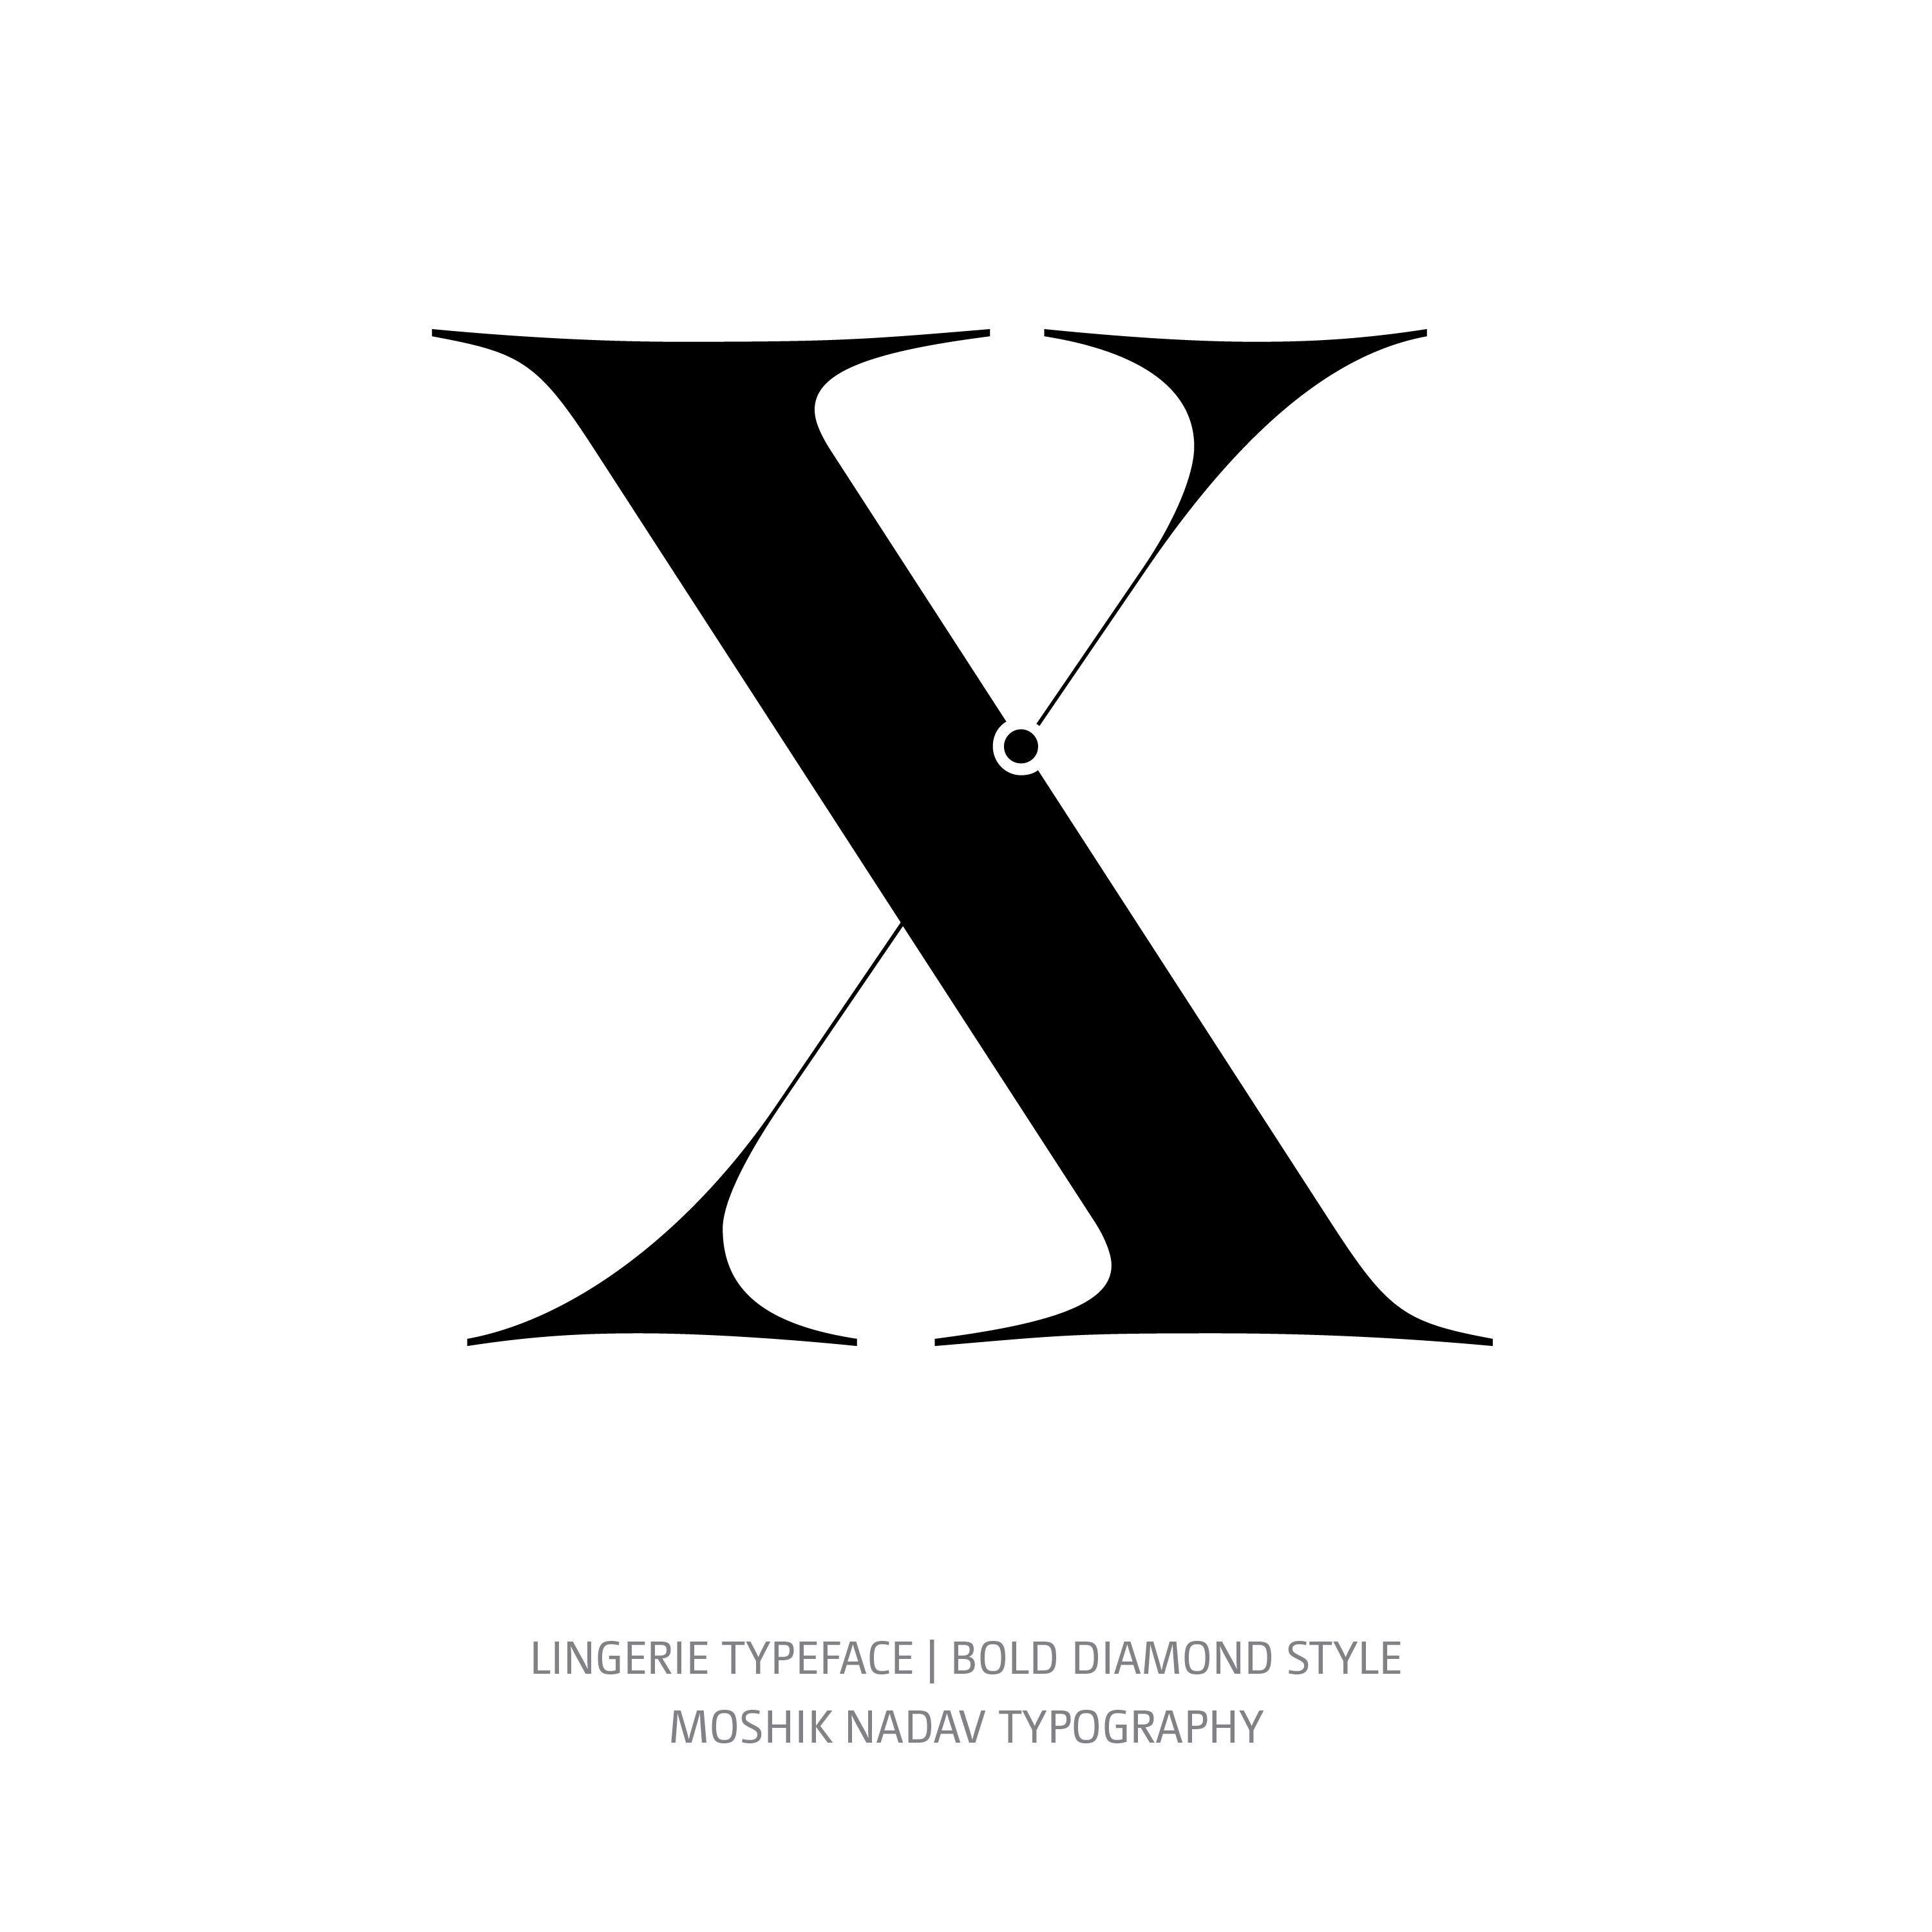 Lingerie Typeface Bold Diamond X